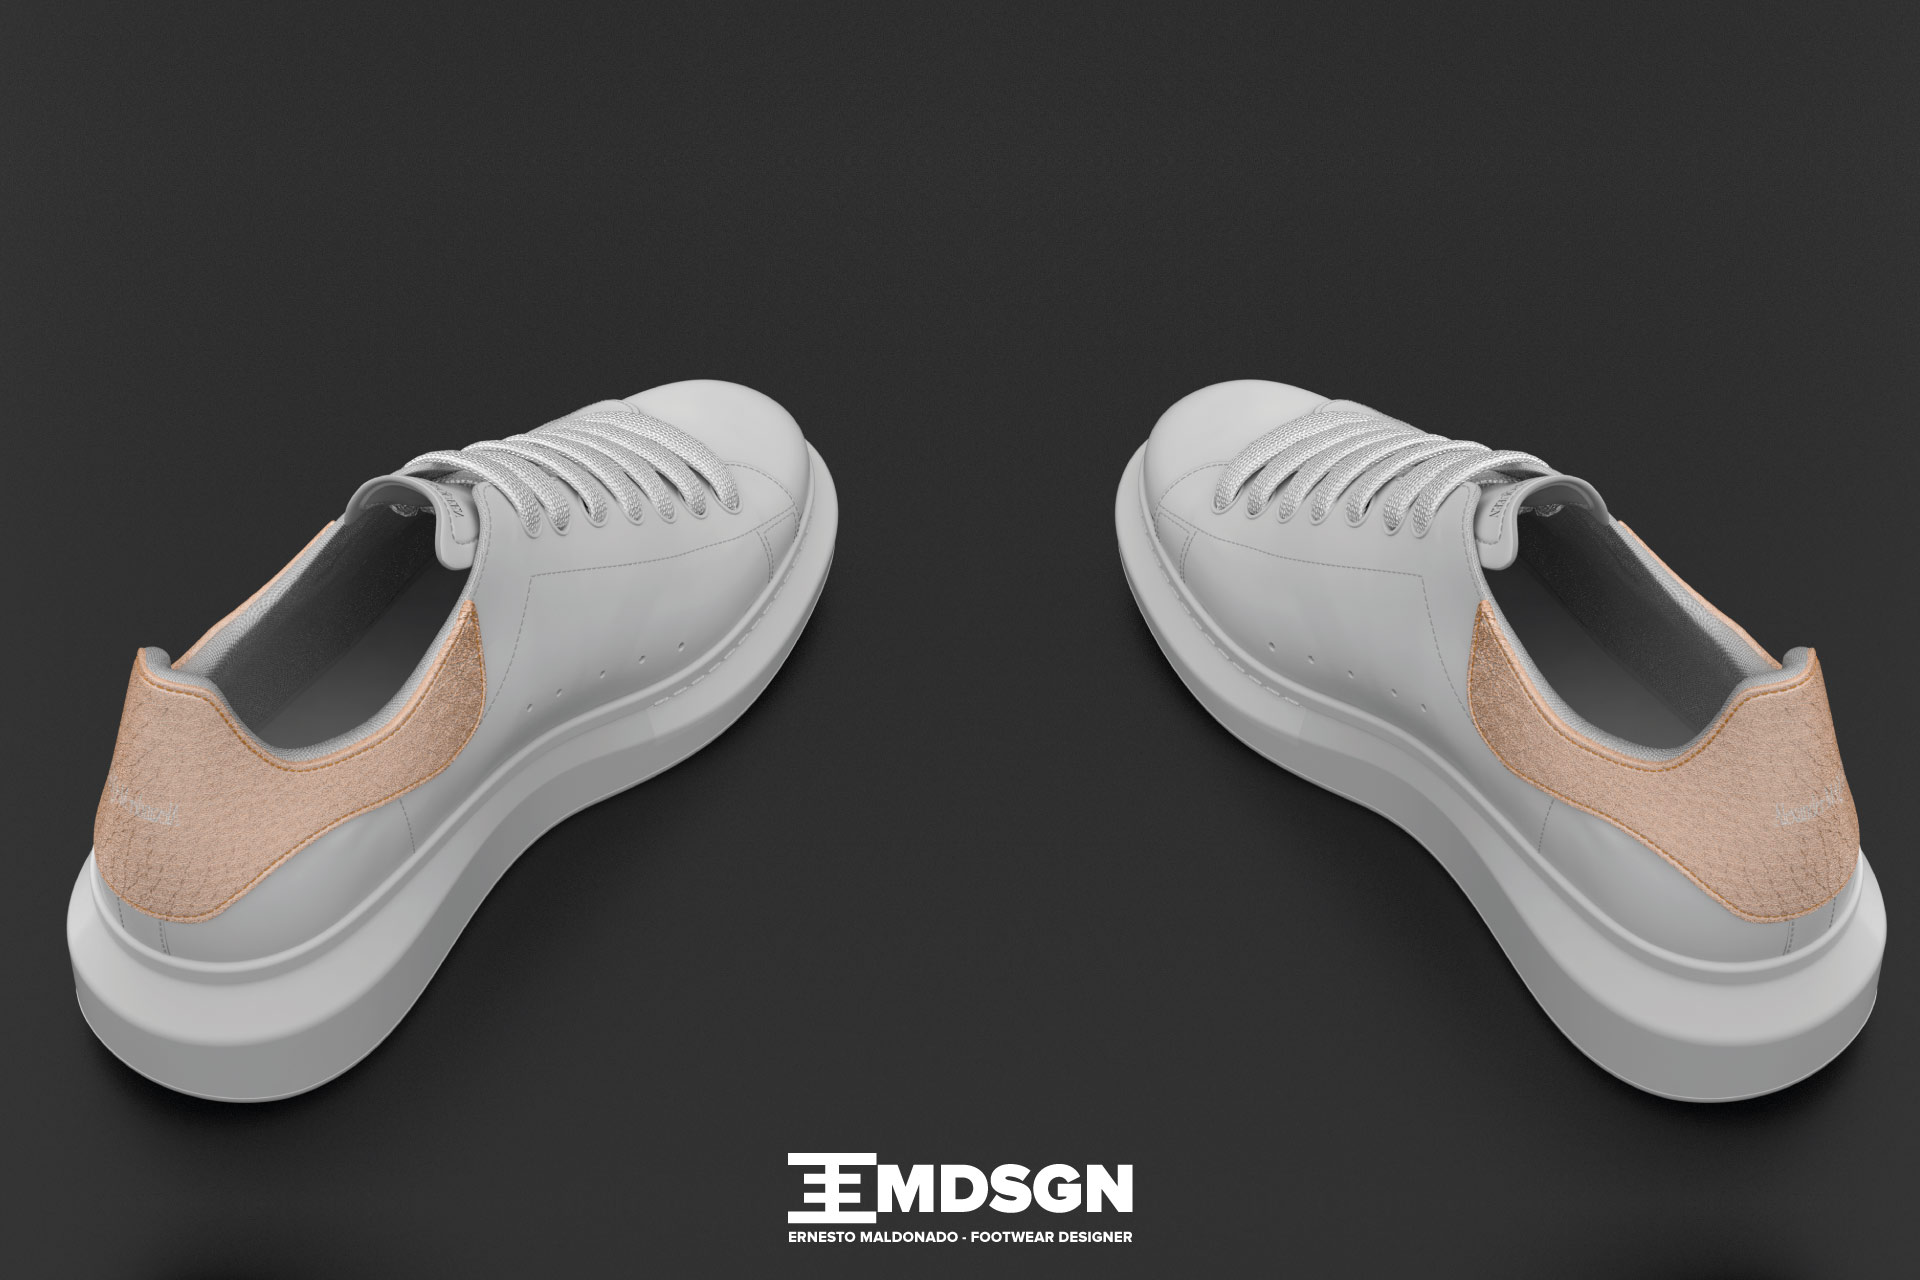 ernesto maldonado footwear 3d designer shoes design 3d shoes